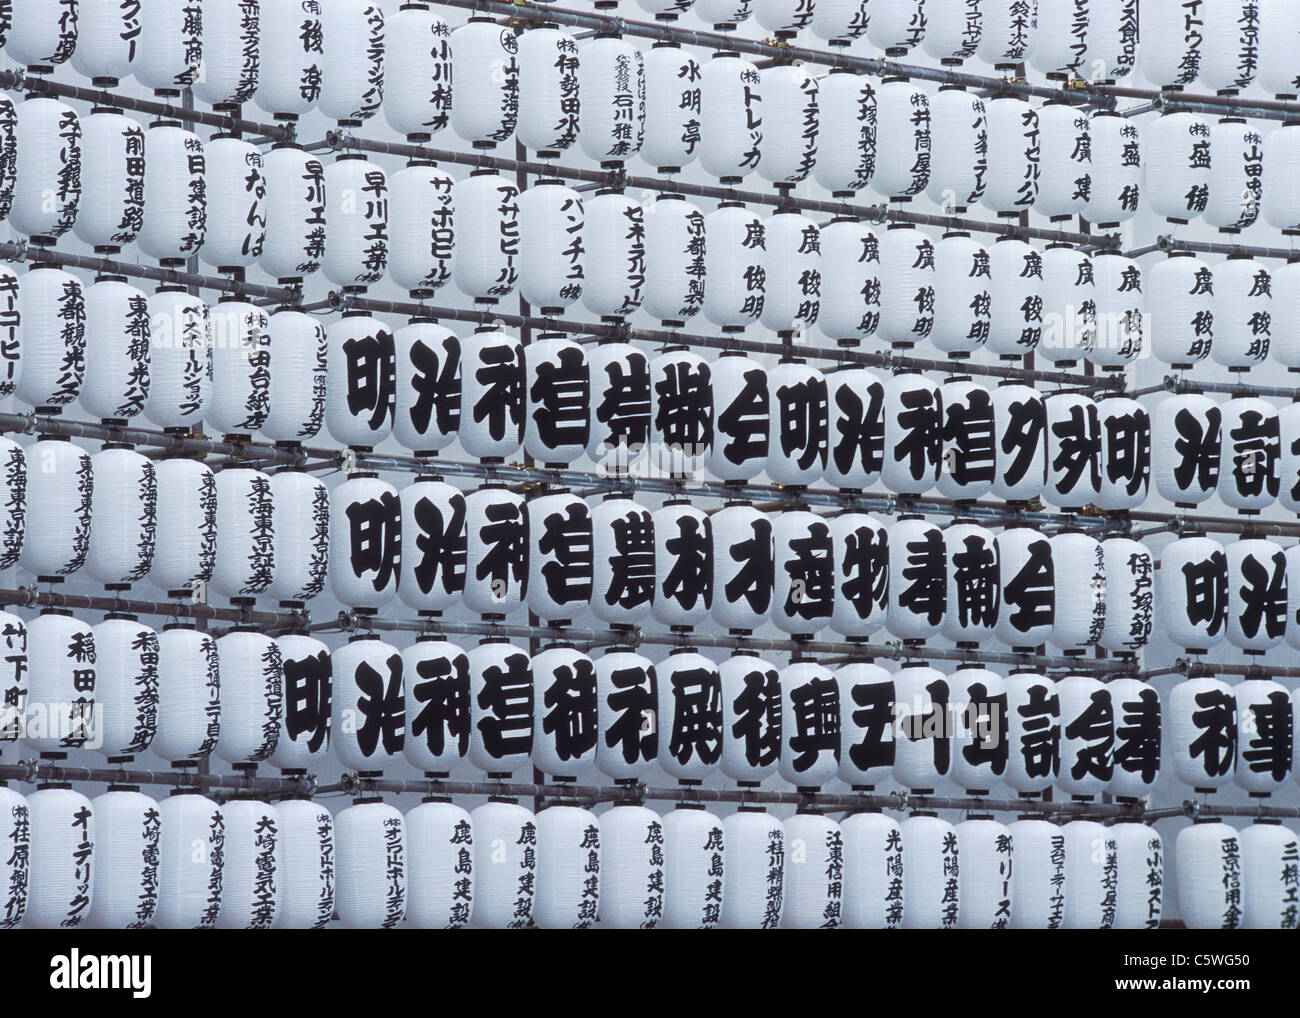 Japan, Tokio, Japanese characters on paper lanterns Stock Photo